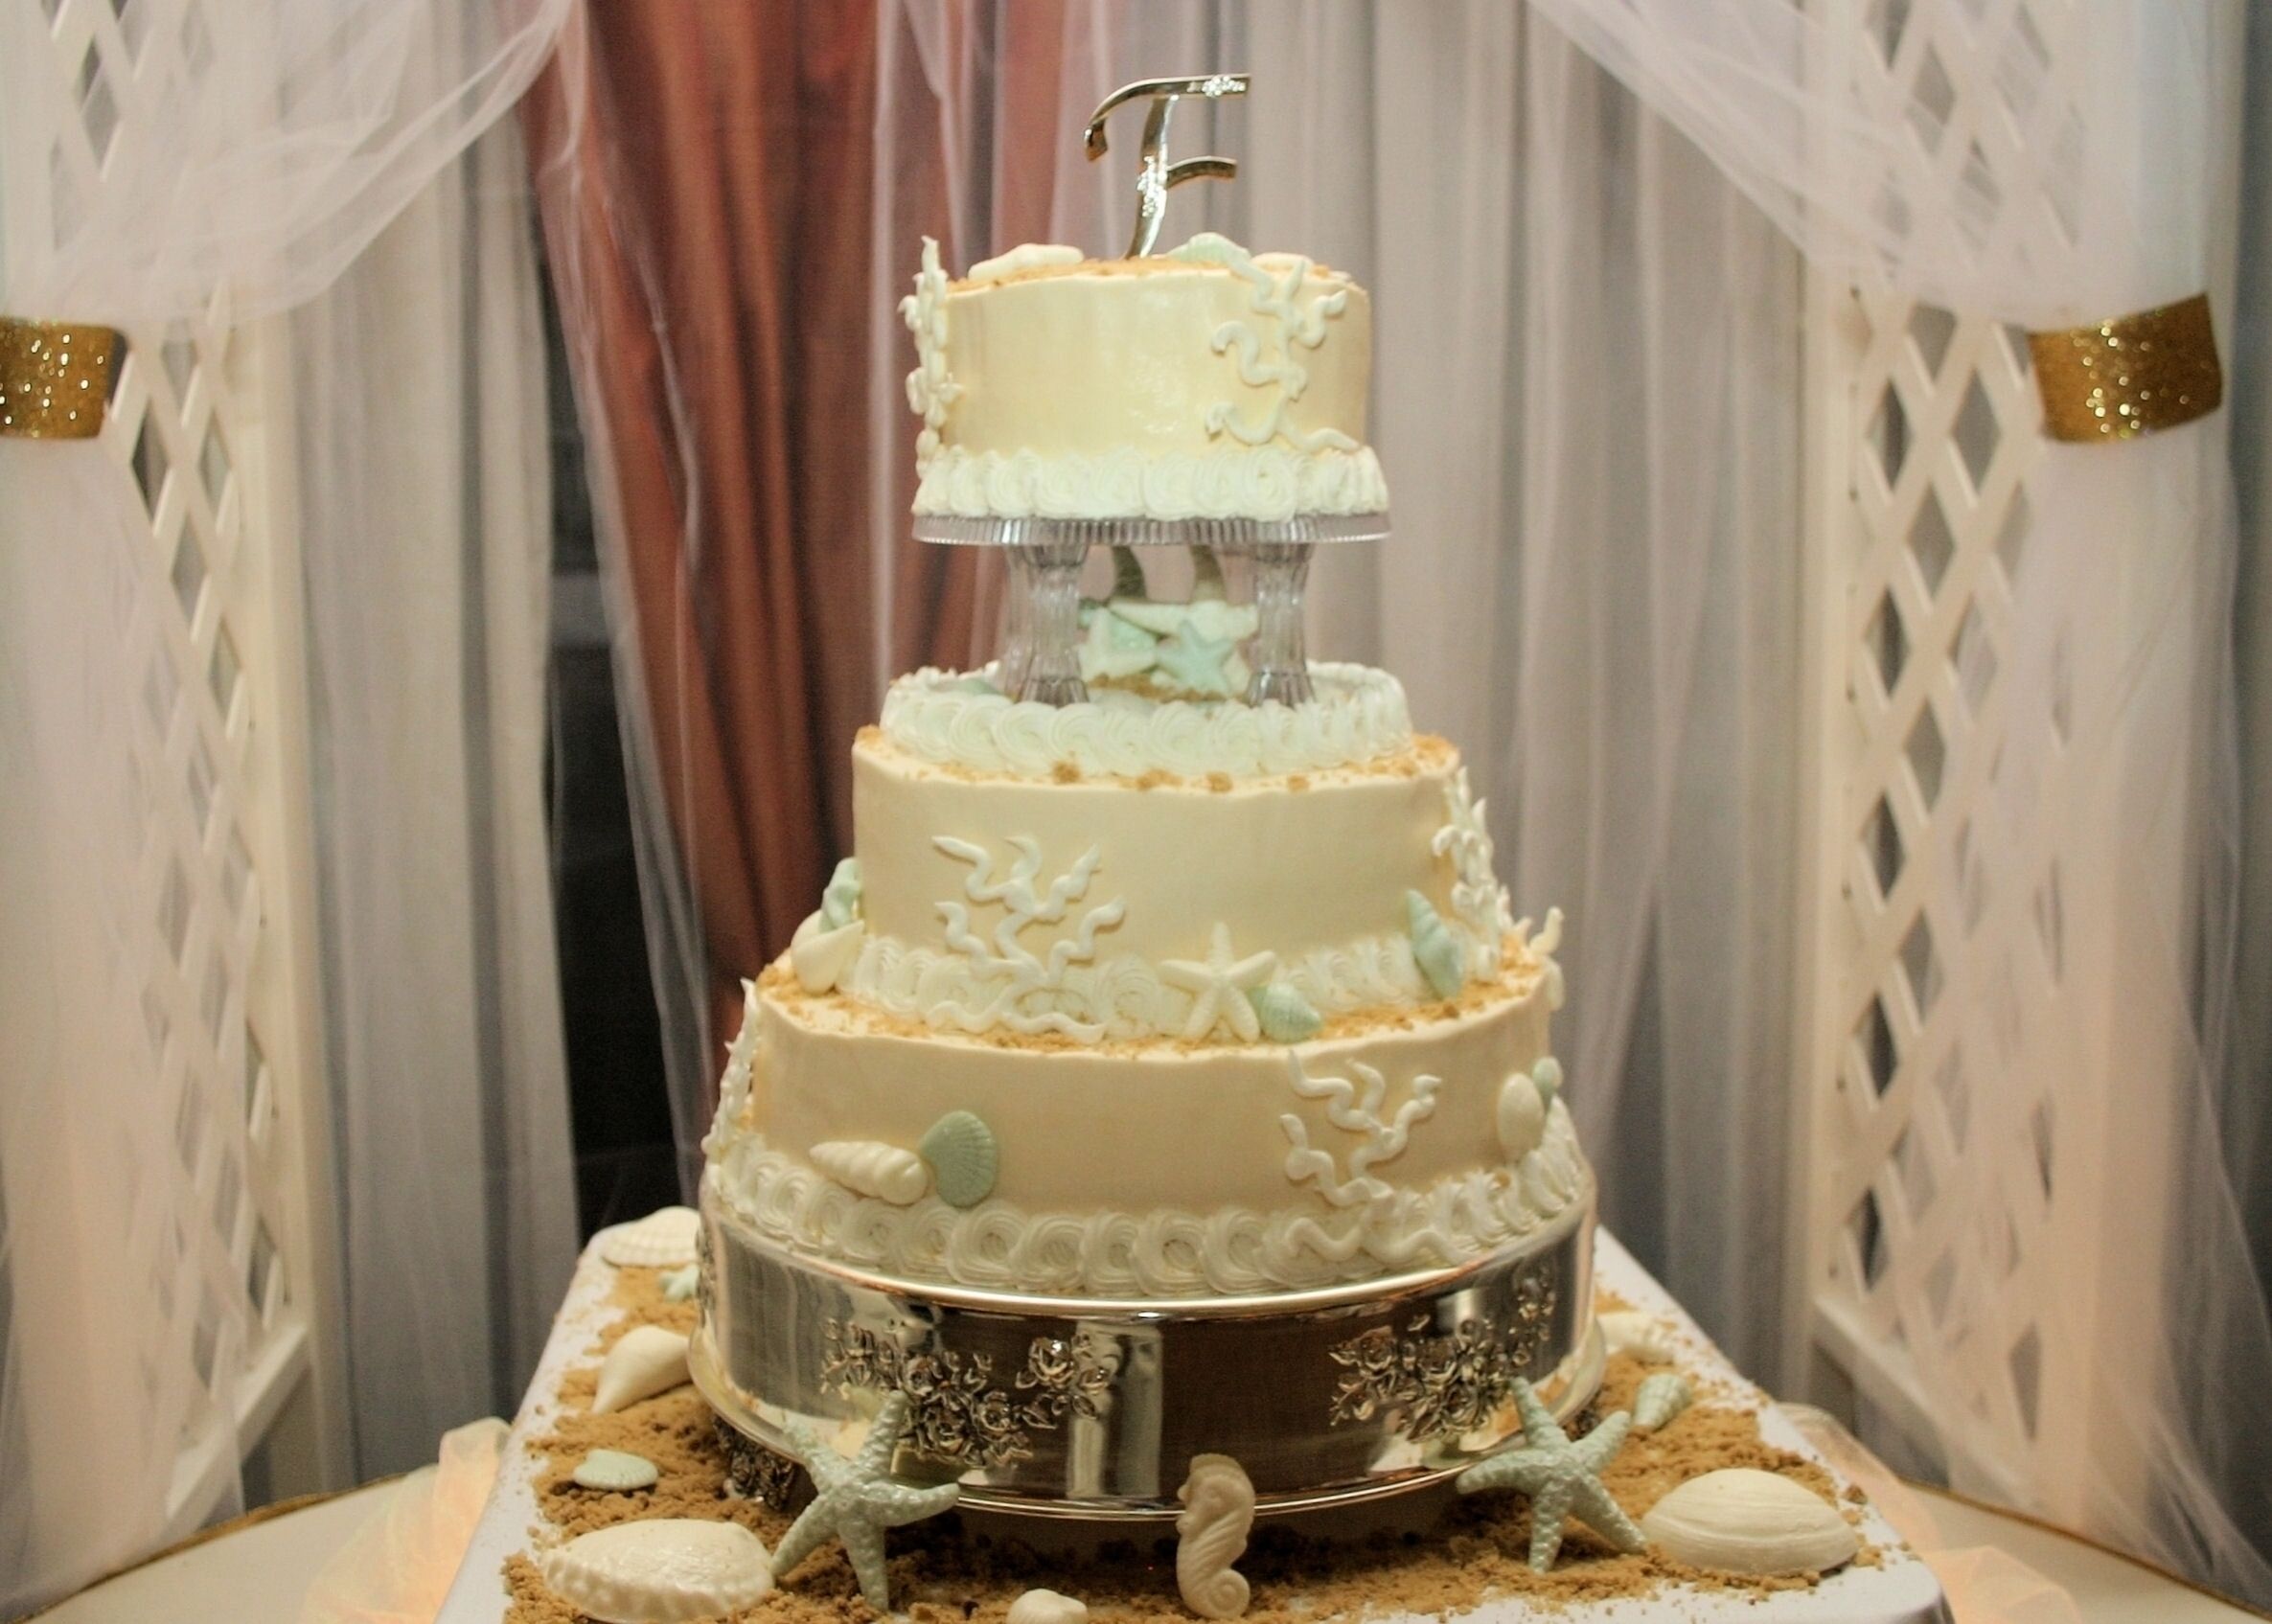 Creative Cakes of Myrtle Beach | Wedding Cakes - Myrtle ...